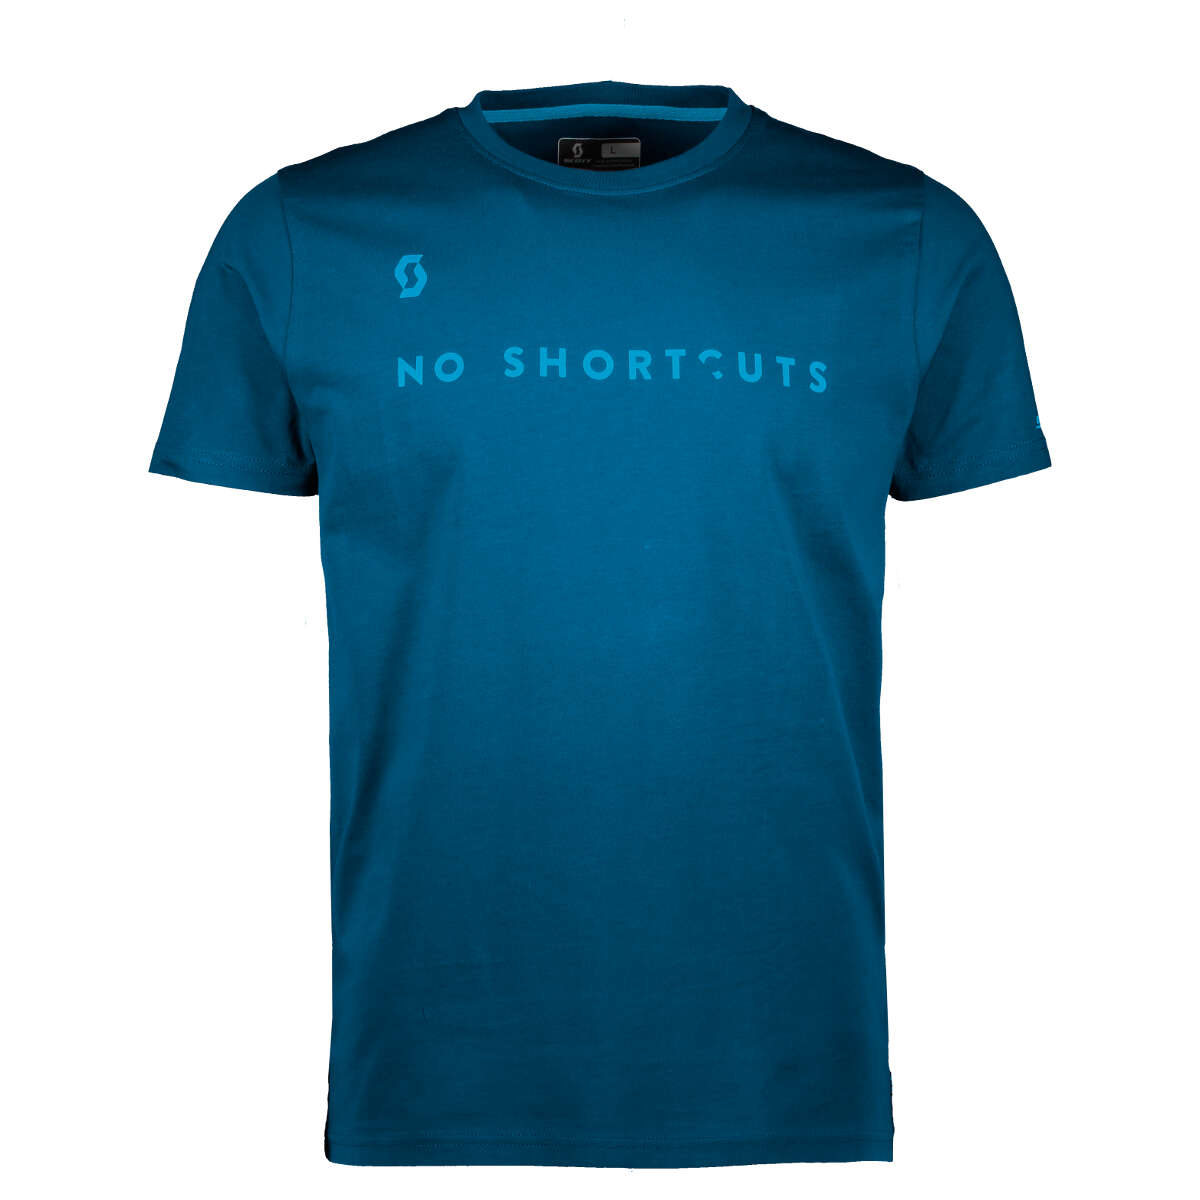 Scott T-Shirt 5 No Shortcuts Lunar Blue